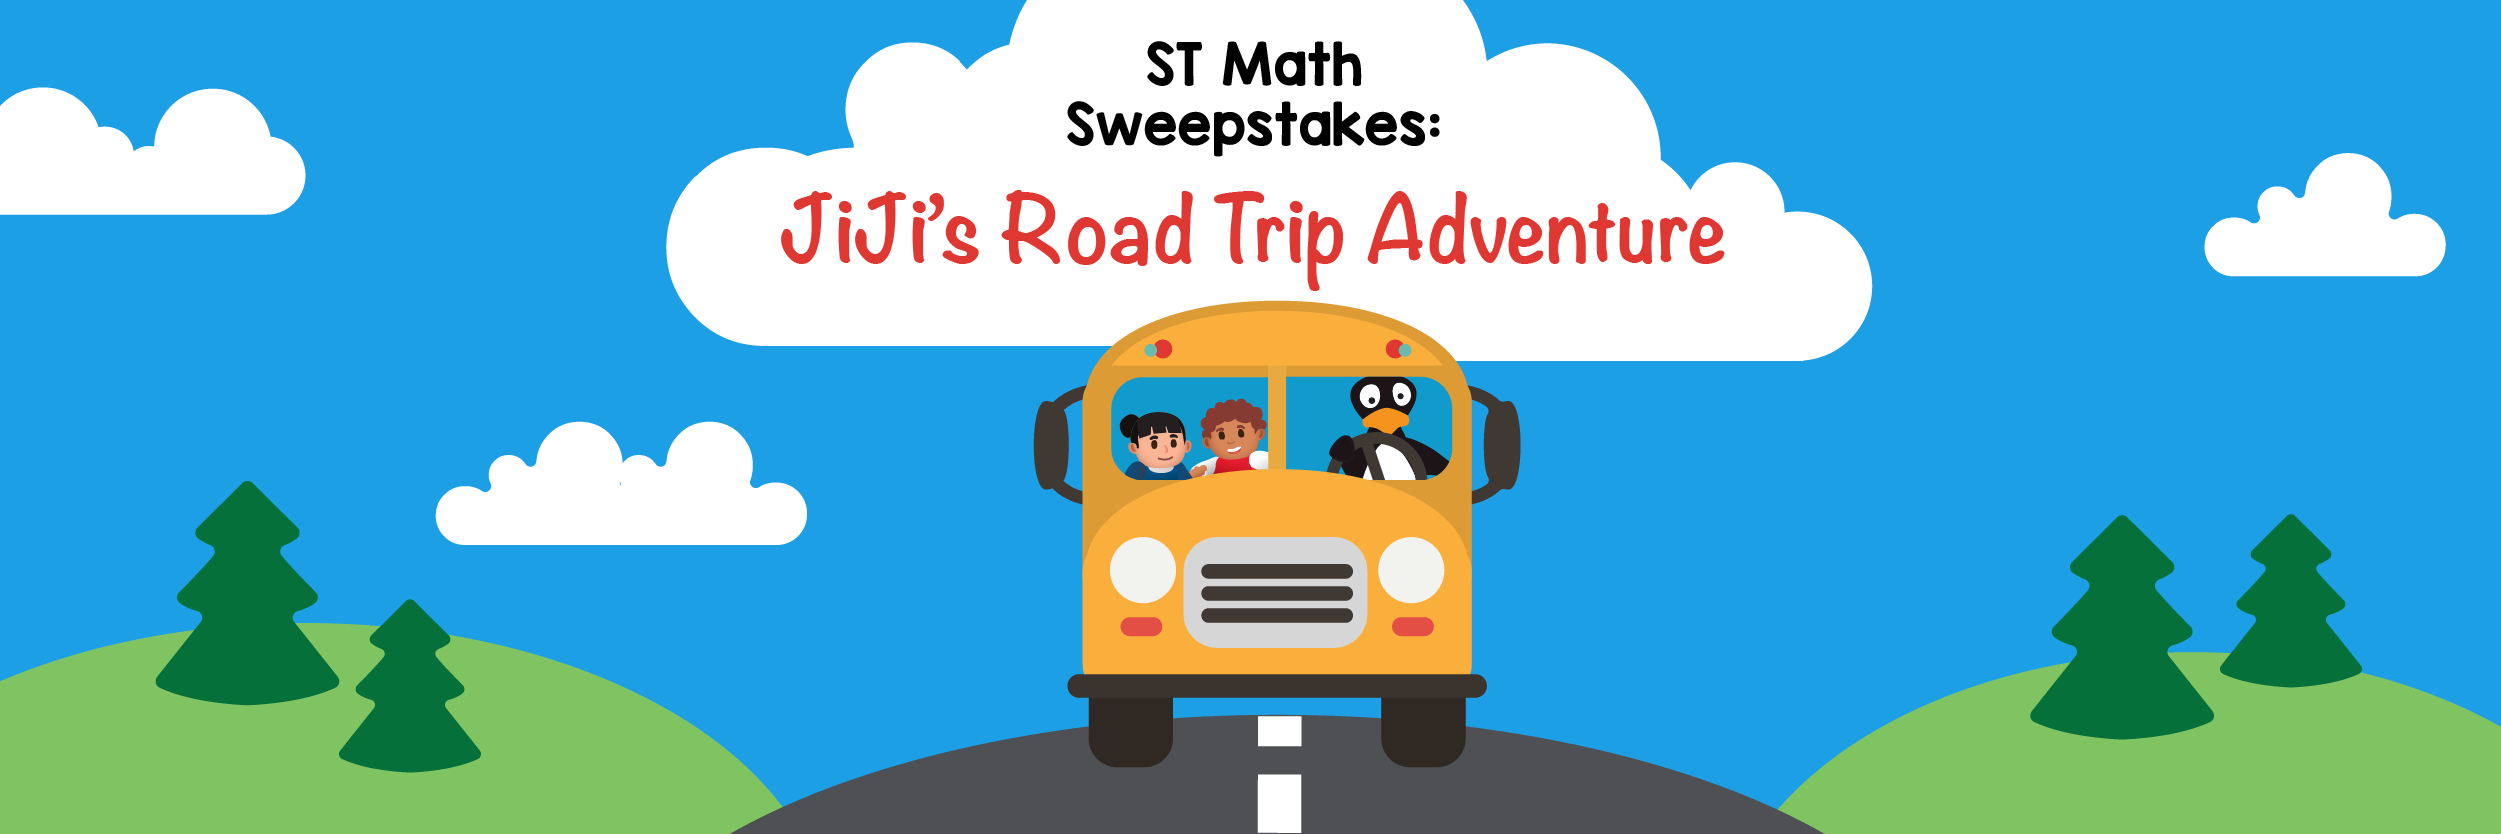 st-math-sweepstakes-jiji-road-trip-adventure